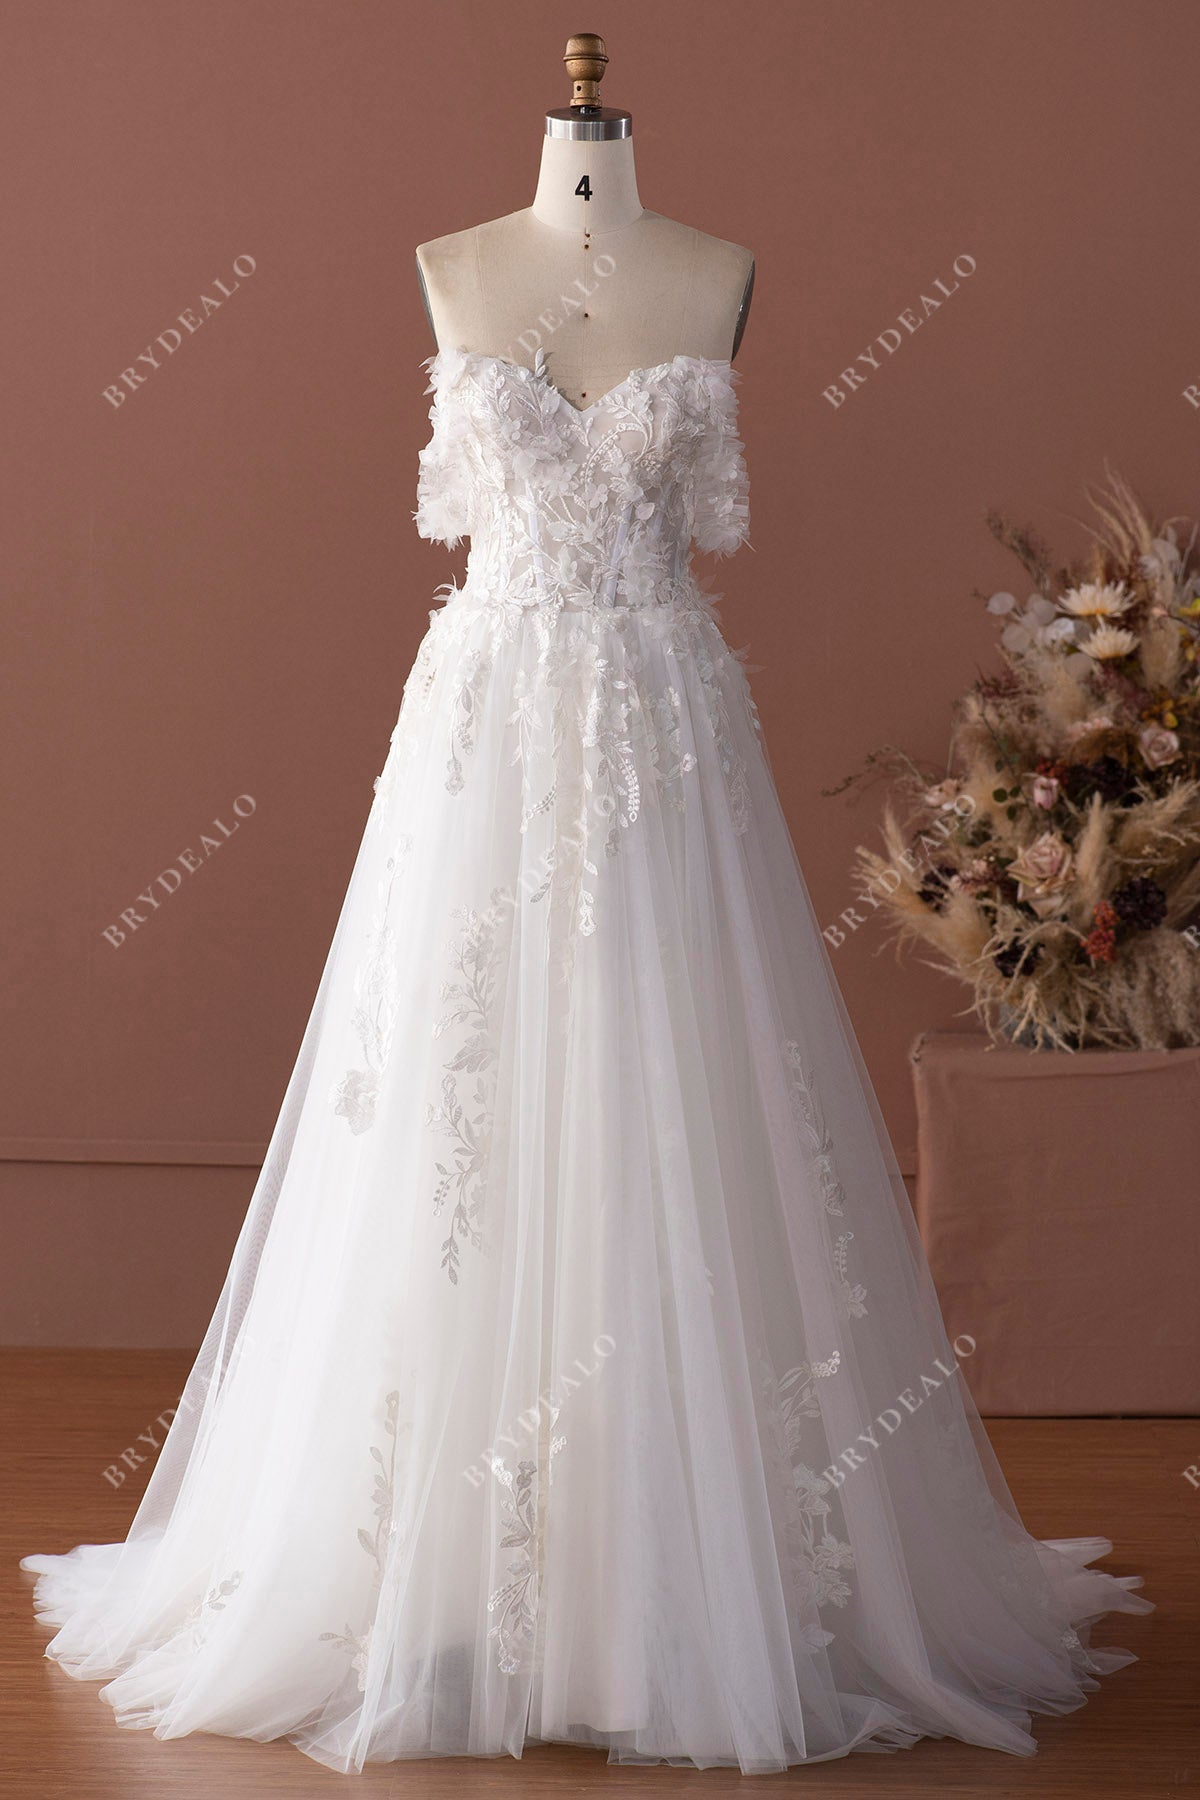 sweetheart neck lace applique wedding dress